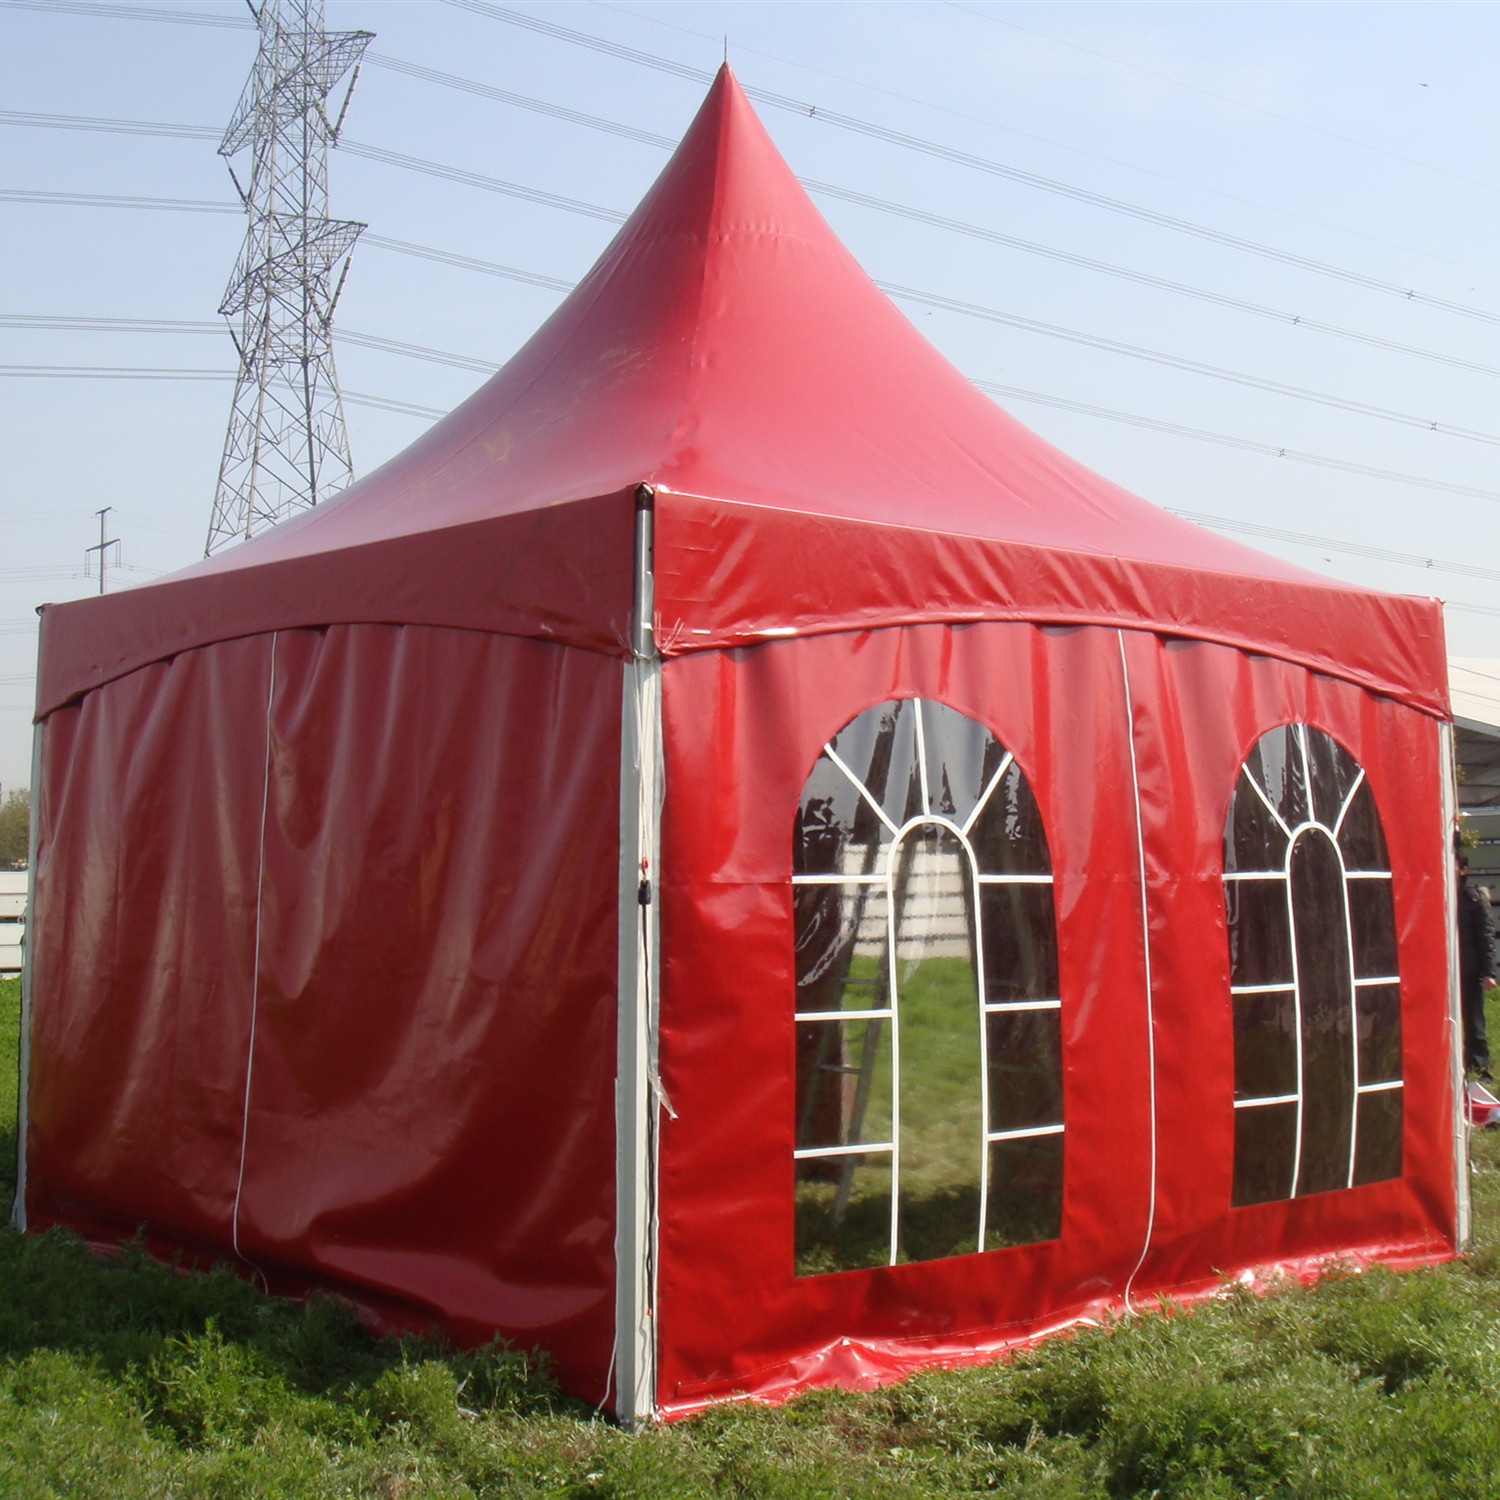 Arabian Tent Manufacturers in chennai